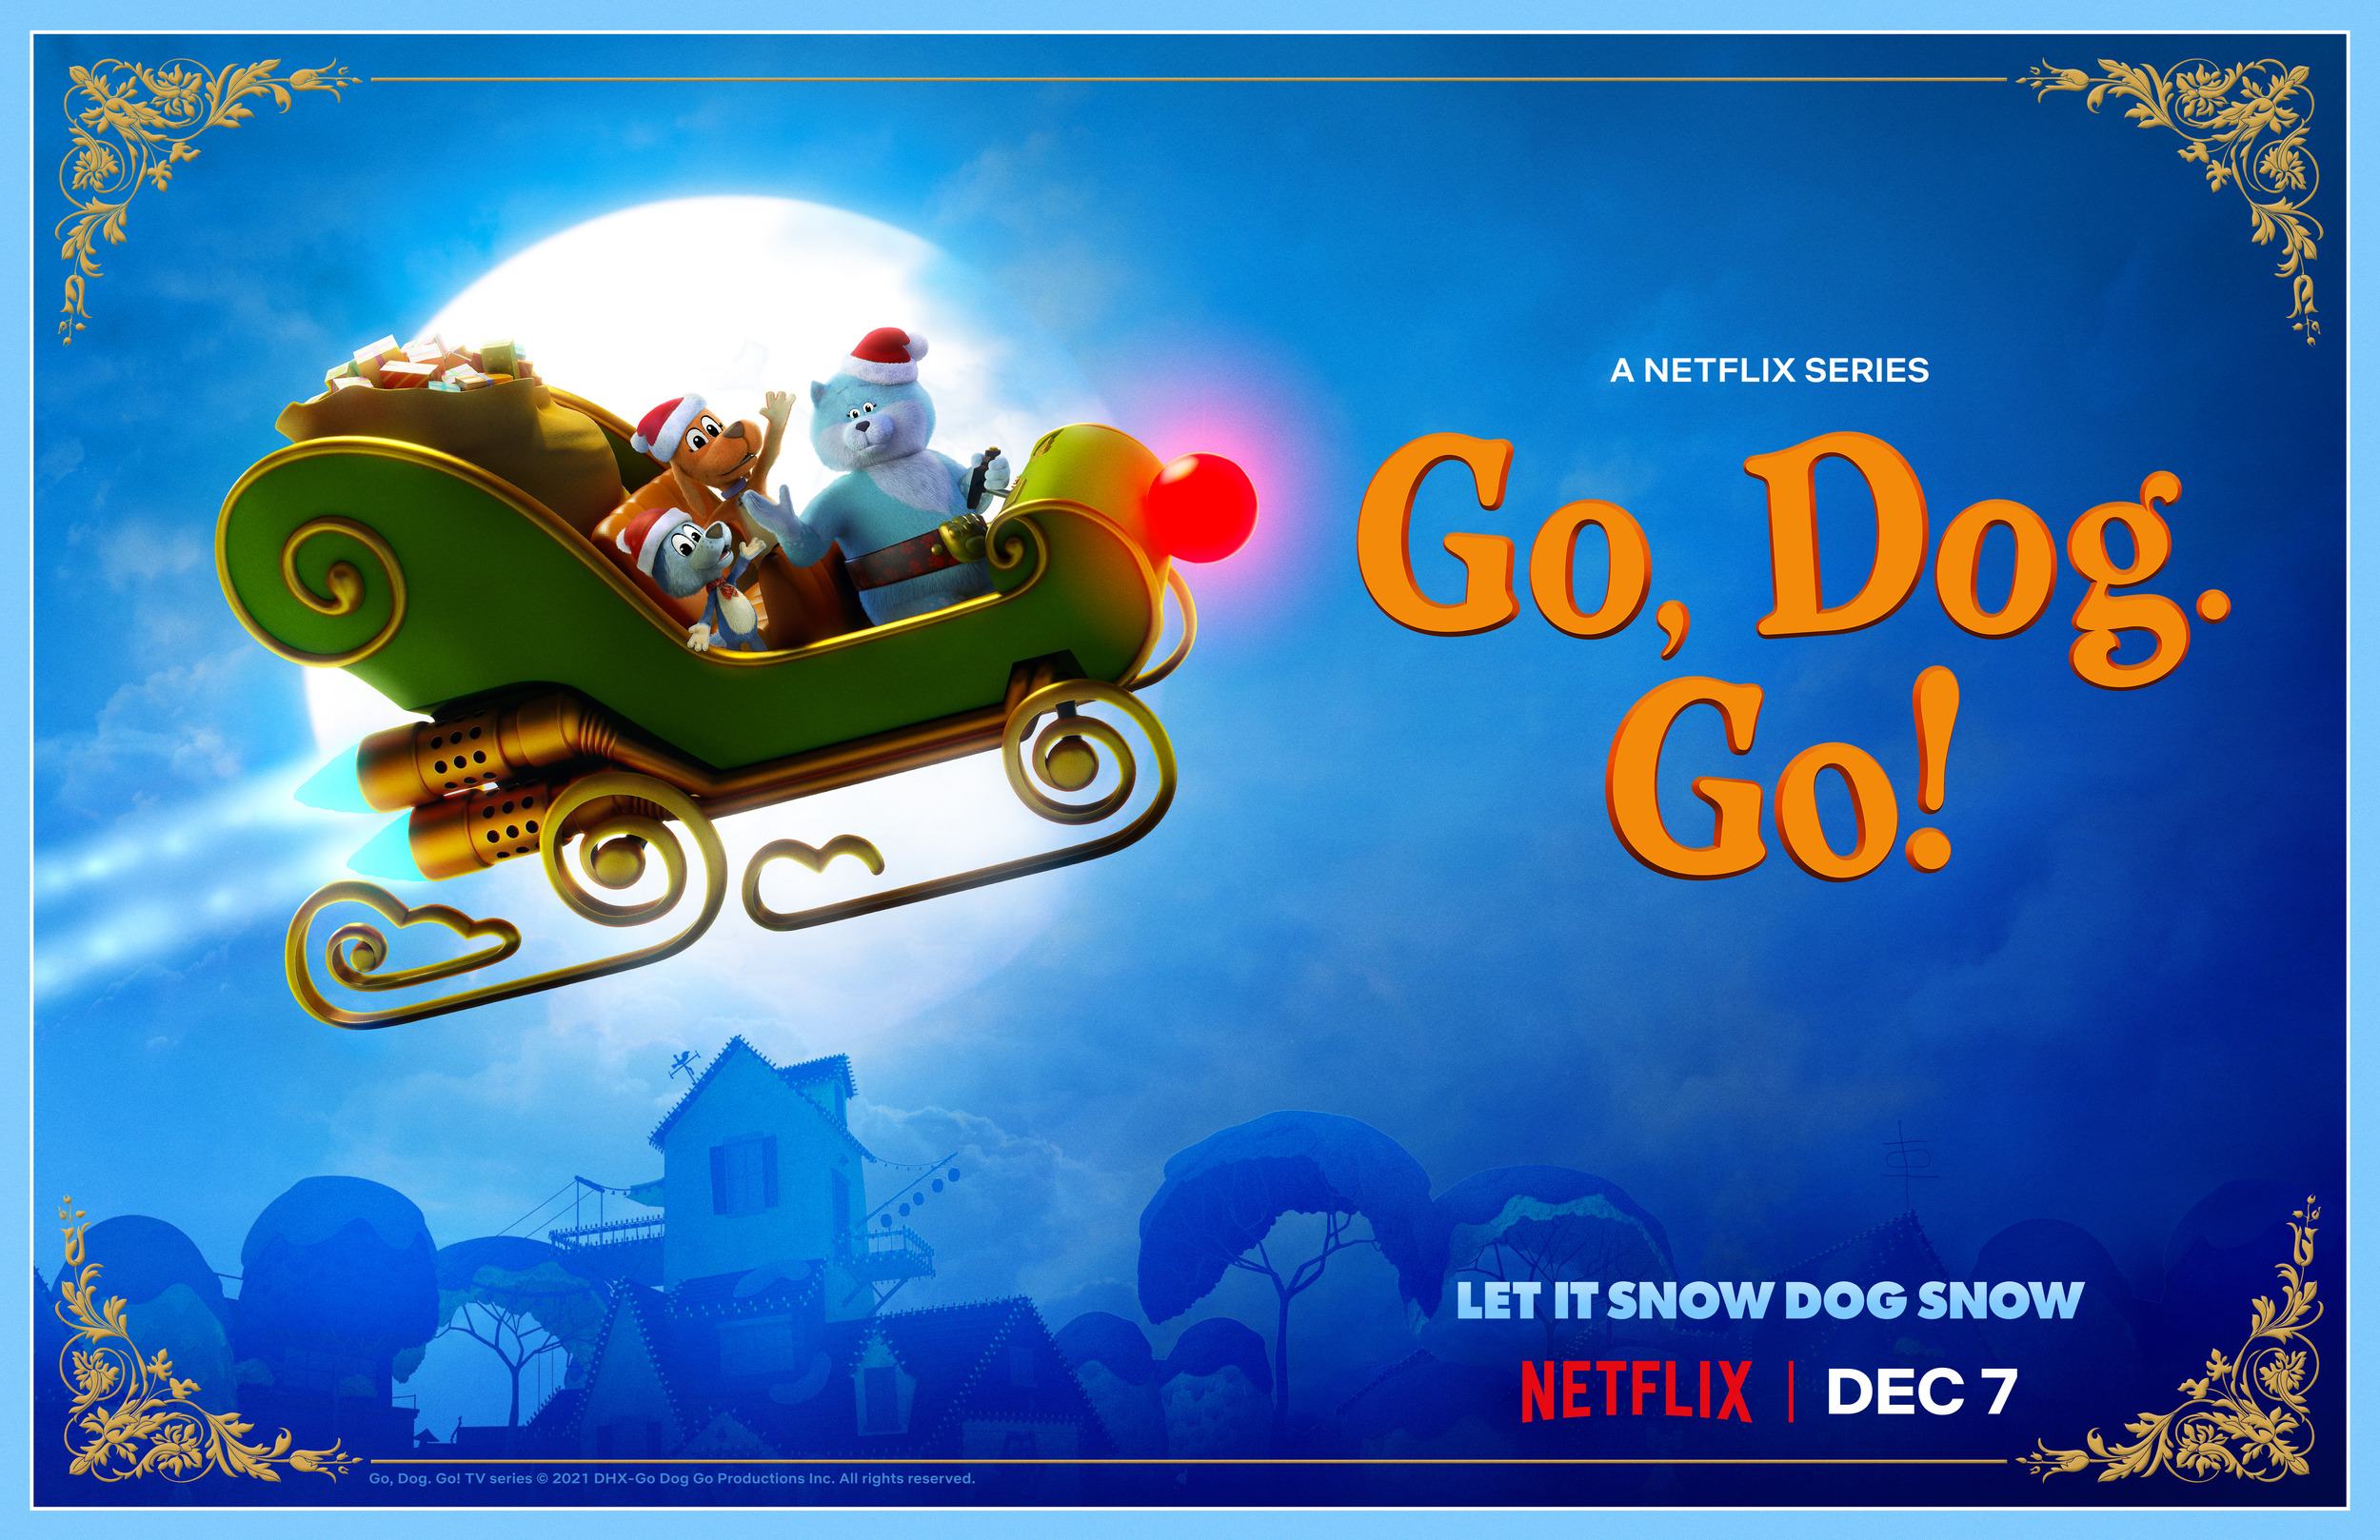 Mega Sized TV Poster Image for Go, Dog, Go (#5 of 7)